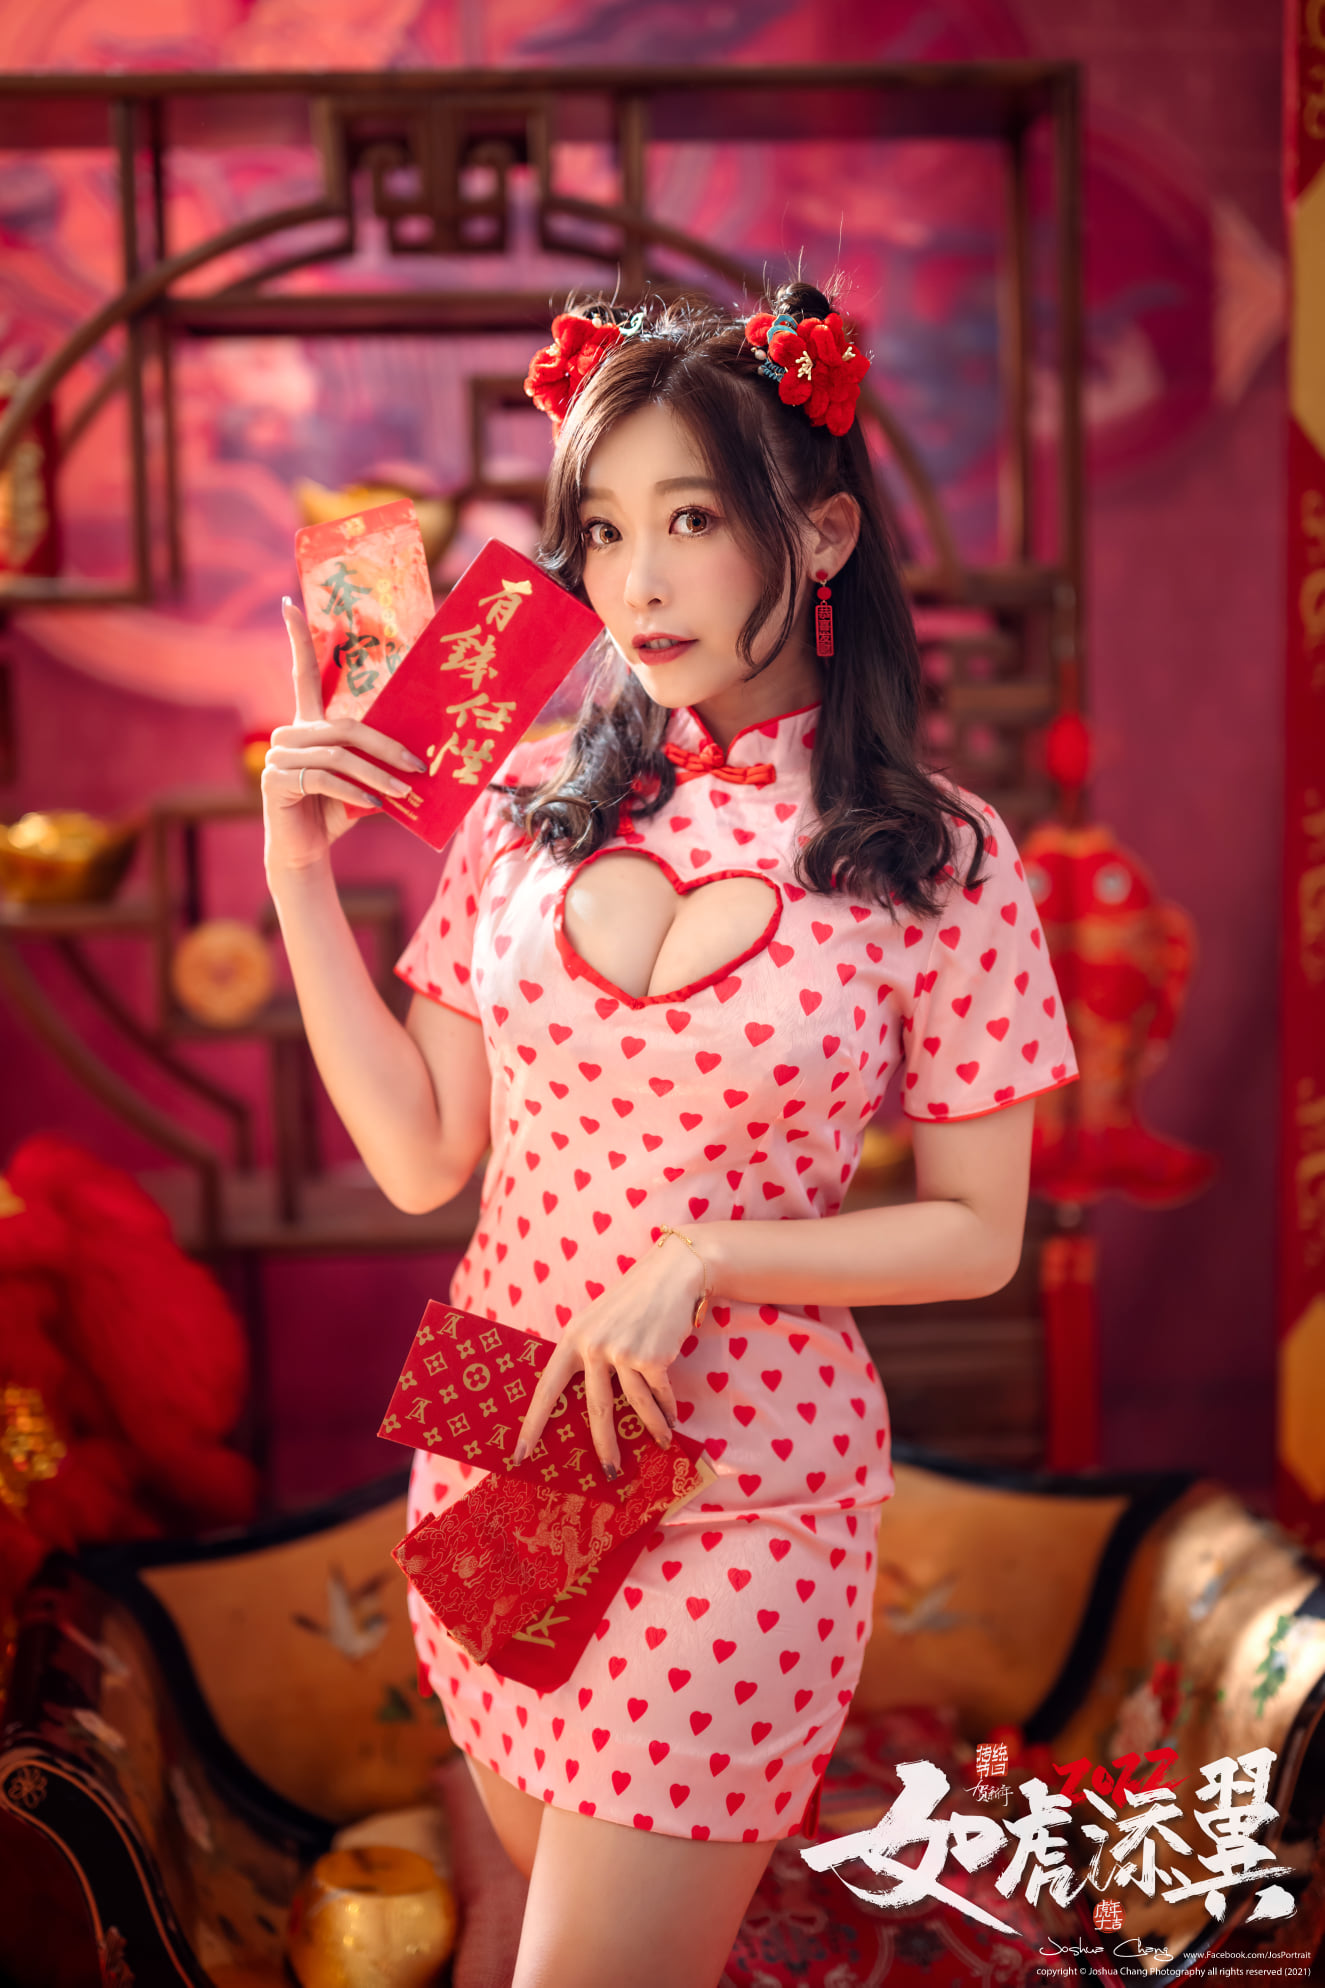 Polka Dots Dress Asian Women Oriental Long Hair Brunette Red Joshua Chang Looking At Viewer Red Lips 1325x1988